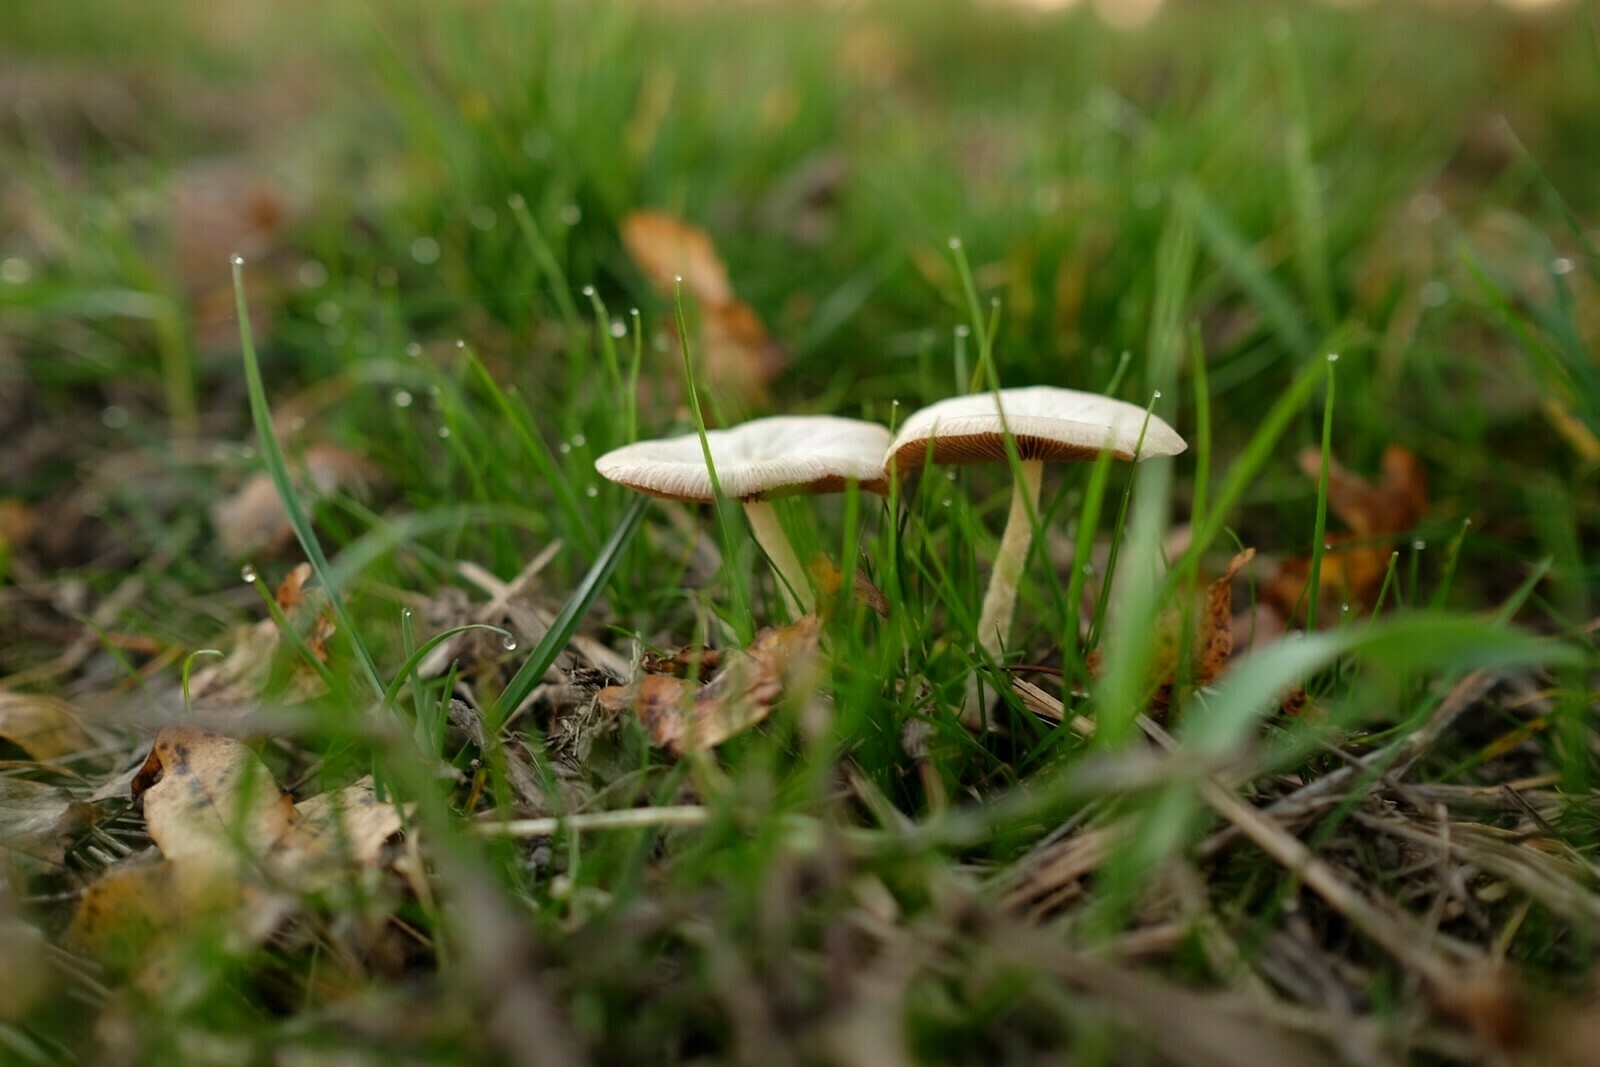 Mushroom, leaves, and grass